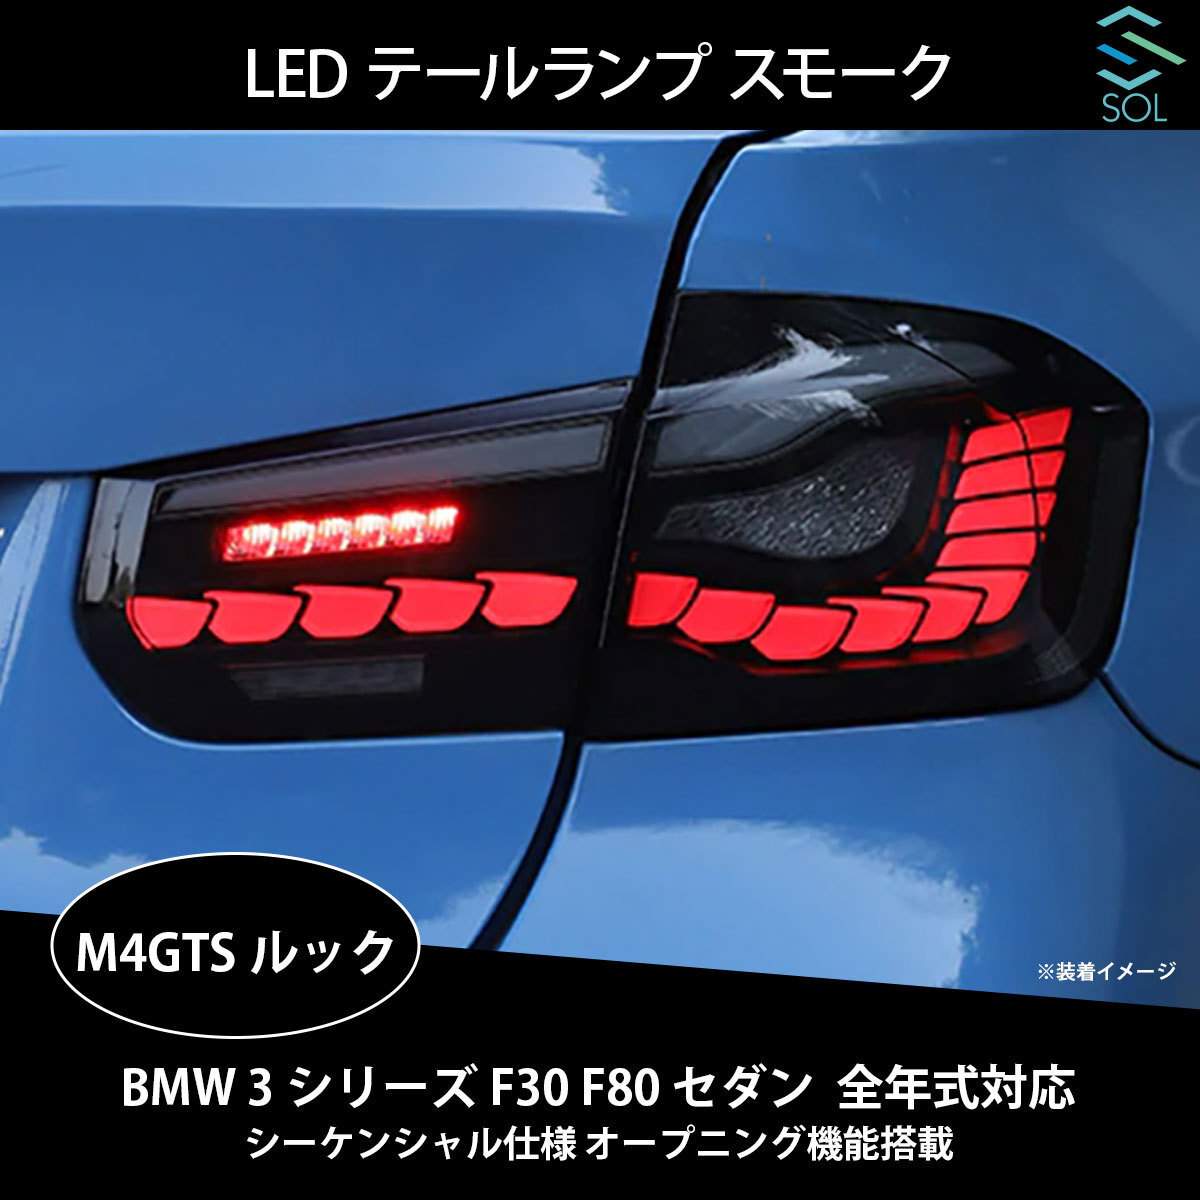 BMW 3シリーズ F30 F80 セダン 全年式対応 M4GTSルック LEDテールランプ スモーク シーケンシャル仕様 オープニング機能搭載 出荷締切18時_画像1